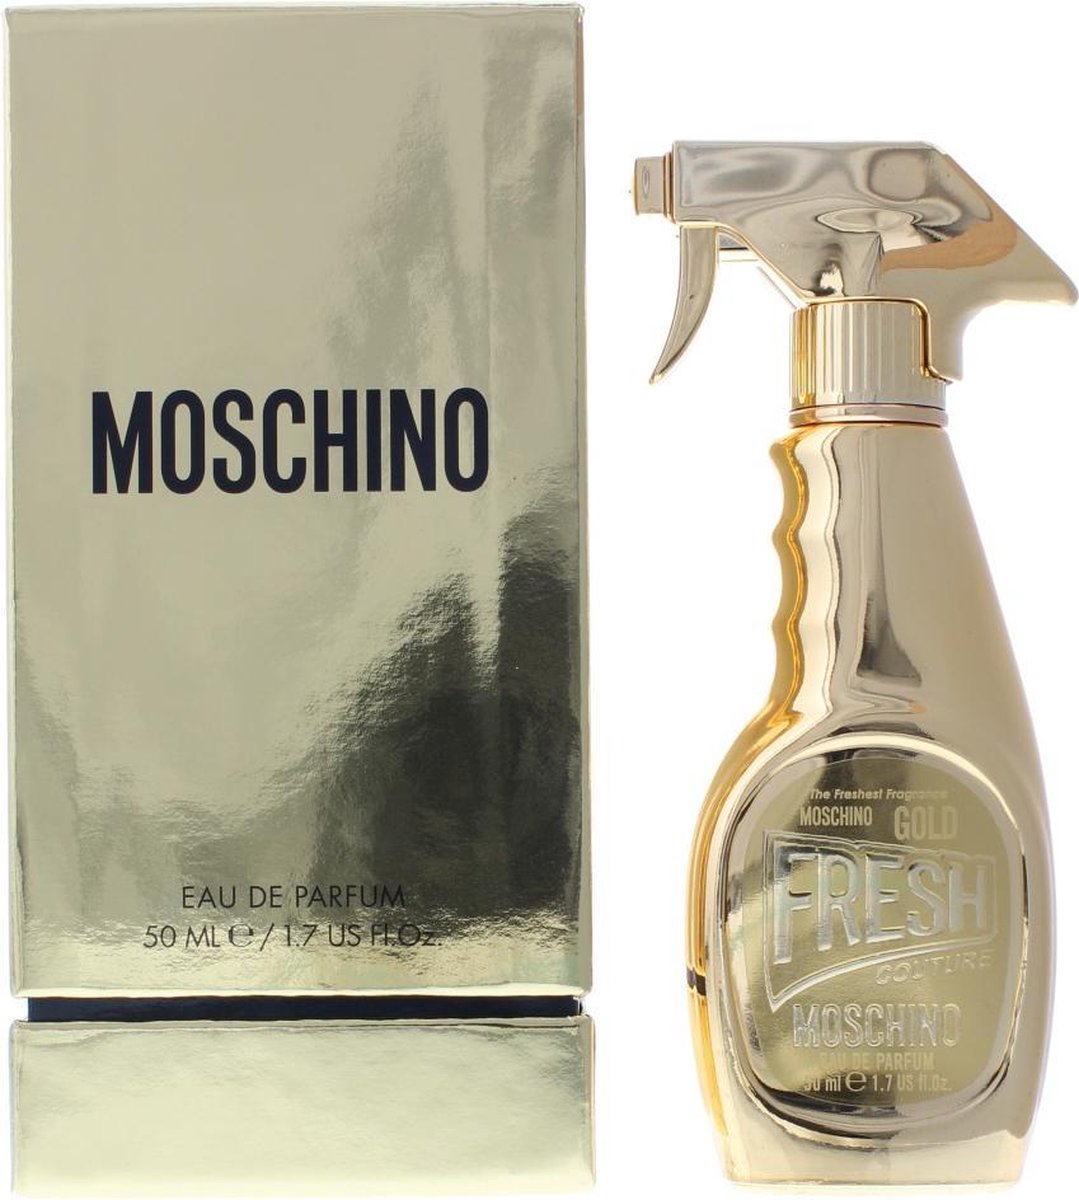 wijs Daar Ten einde raad Moschino - Eau de parfum - Gold Fresh Couture - 50 ml | bol.com